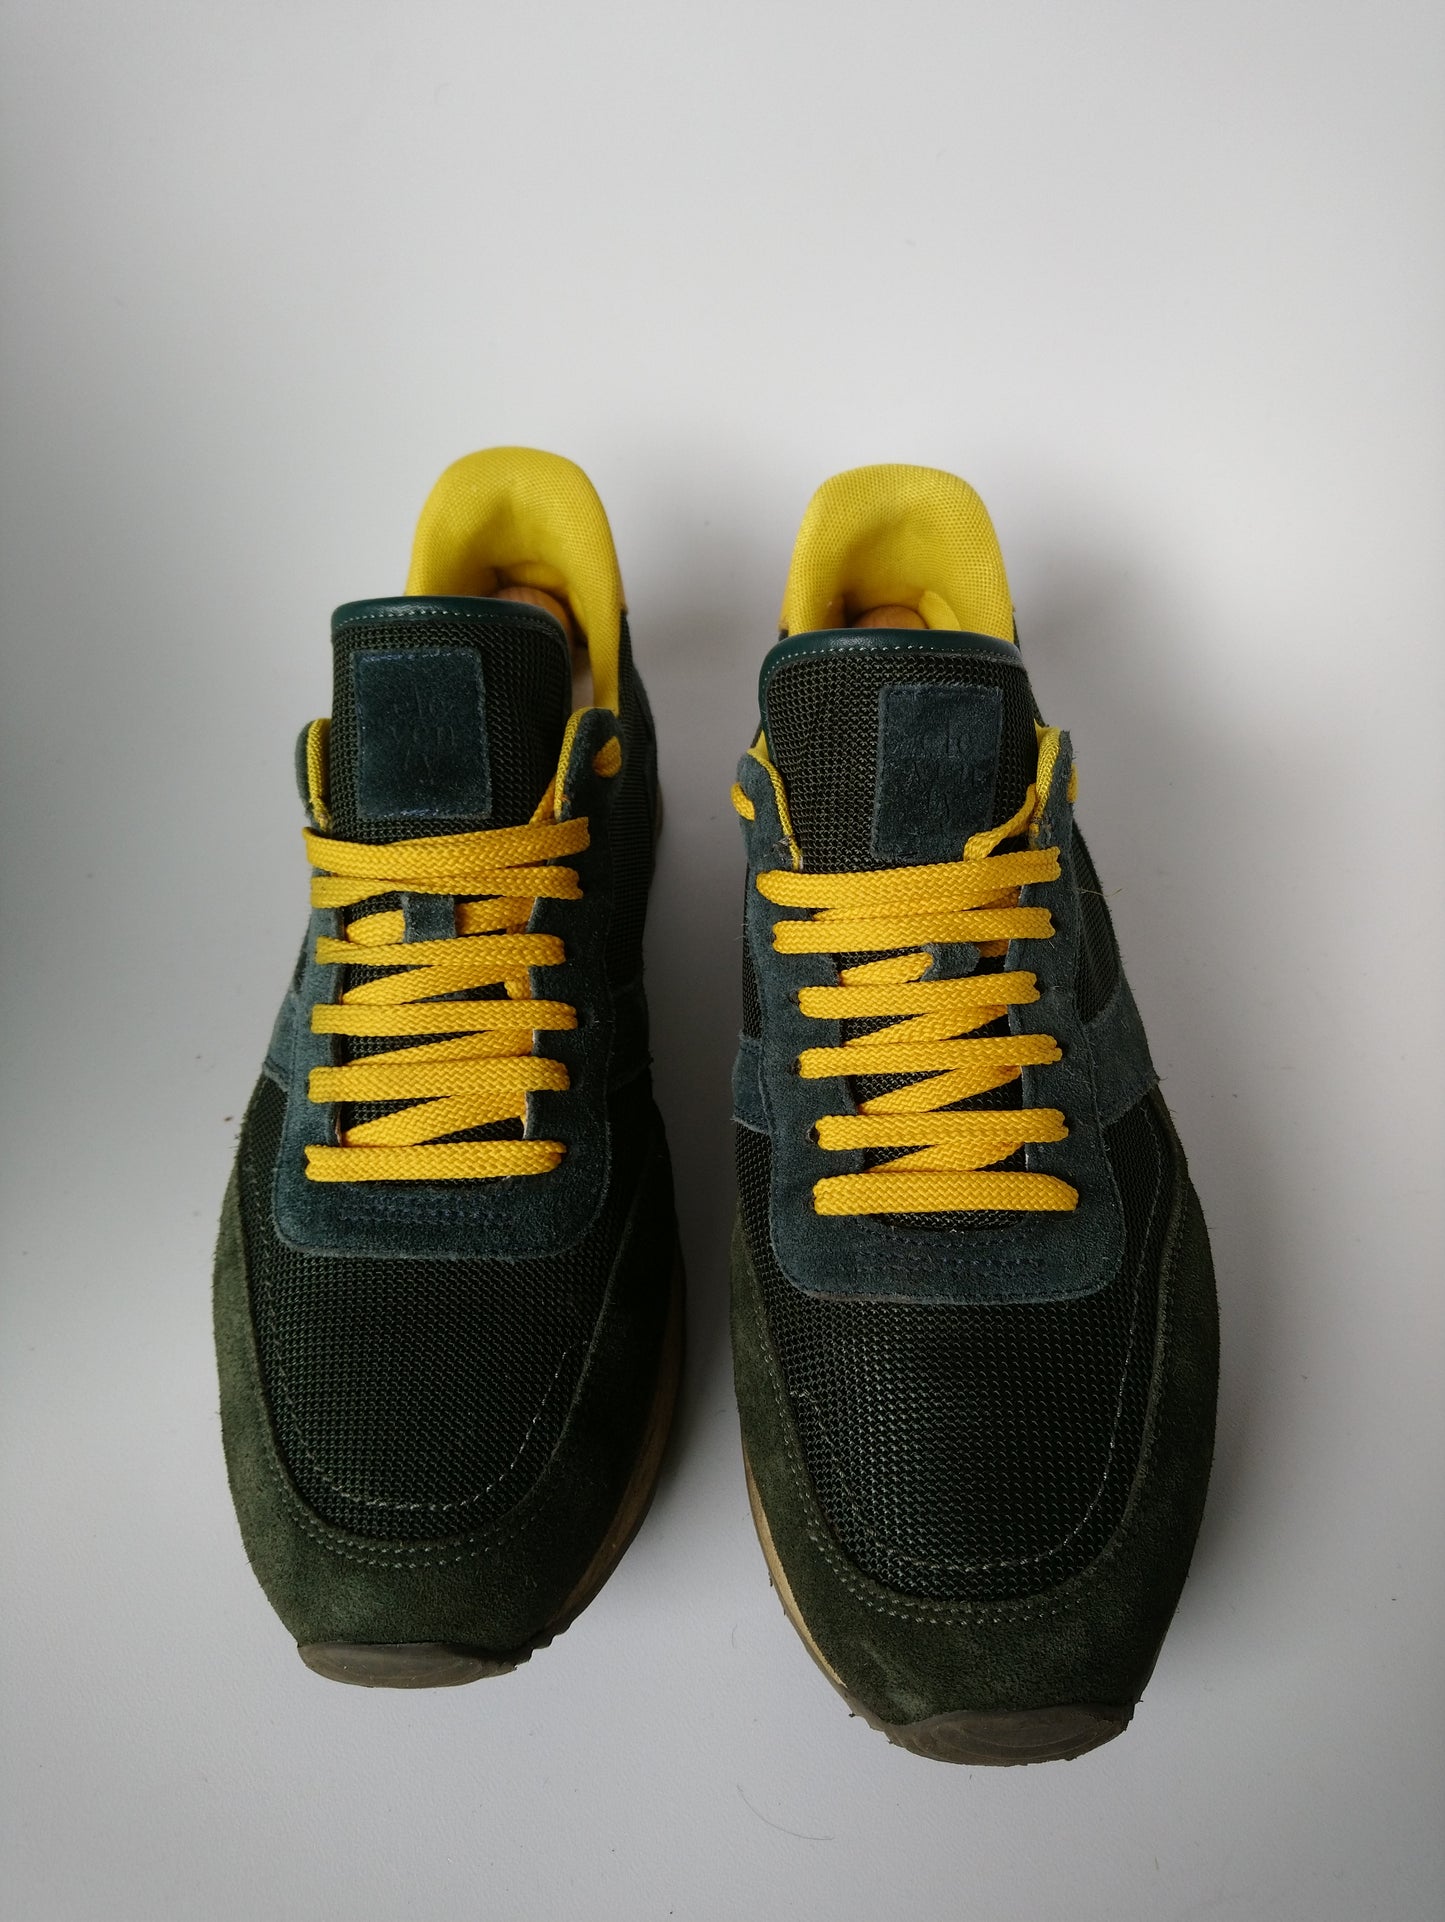 Eleventy / 11ty sneakers. Donker Groen Geel gekleurd. Maat 43.